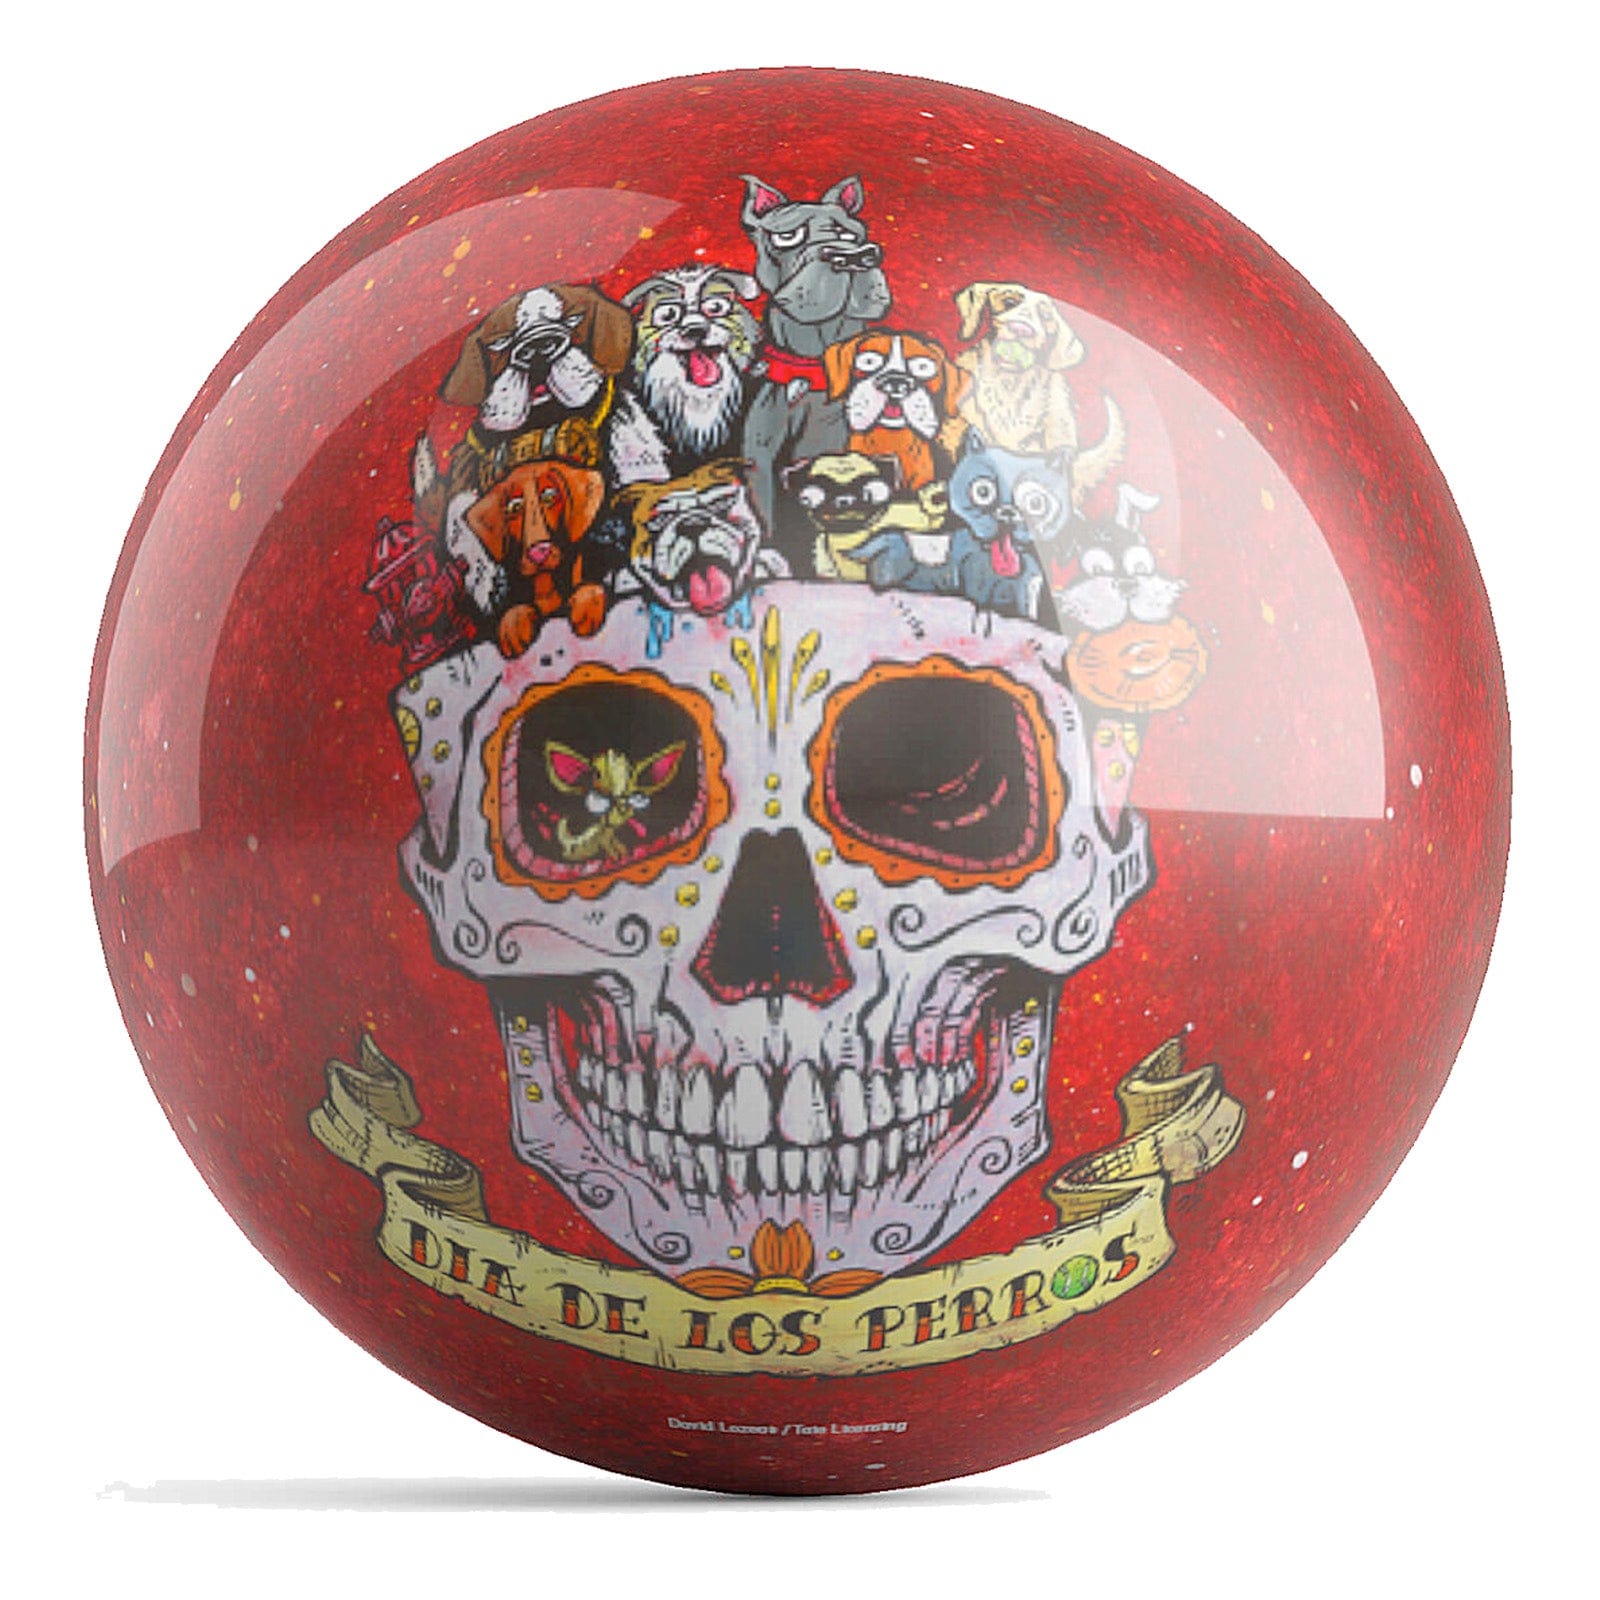 OnTheBallBowling Los Perros Ball Bowling Ball by David Lozeau